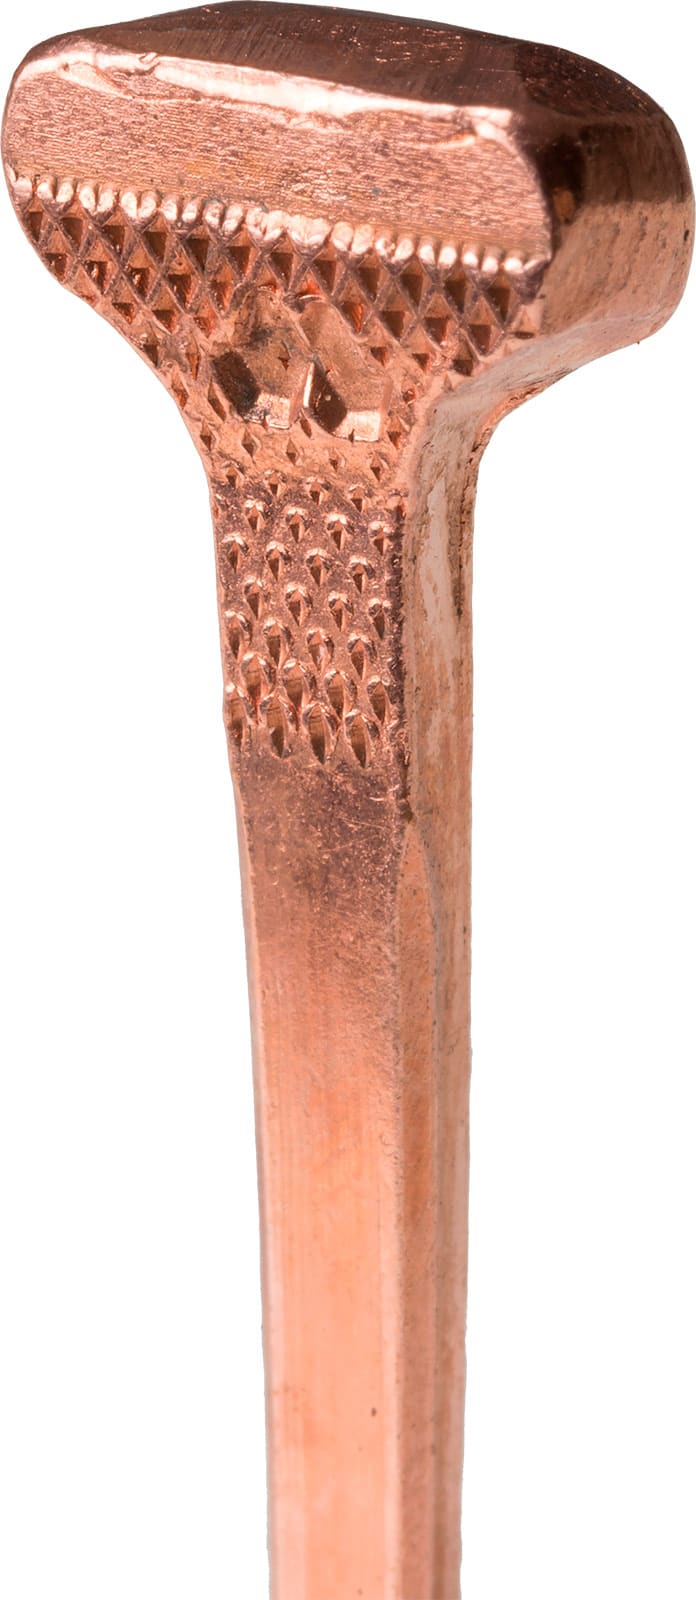 Mustad Copper HammerHead hoof nail, head view